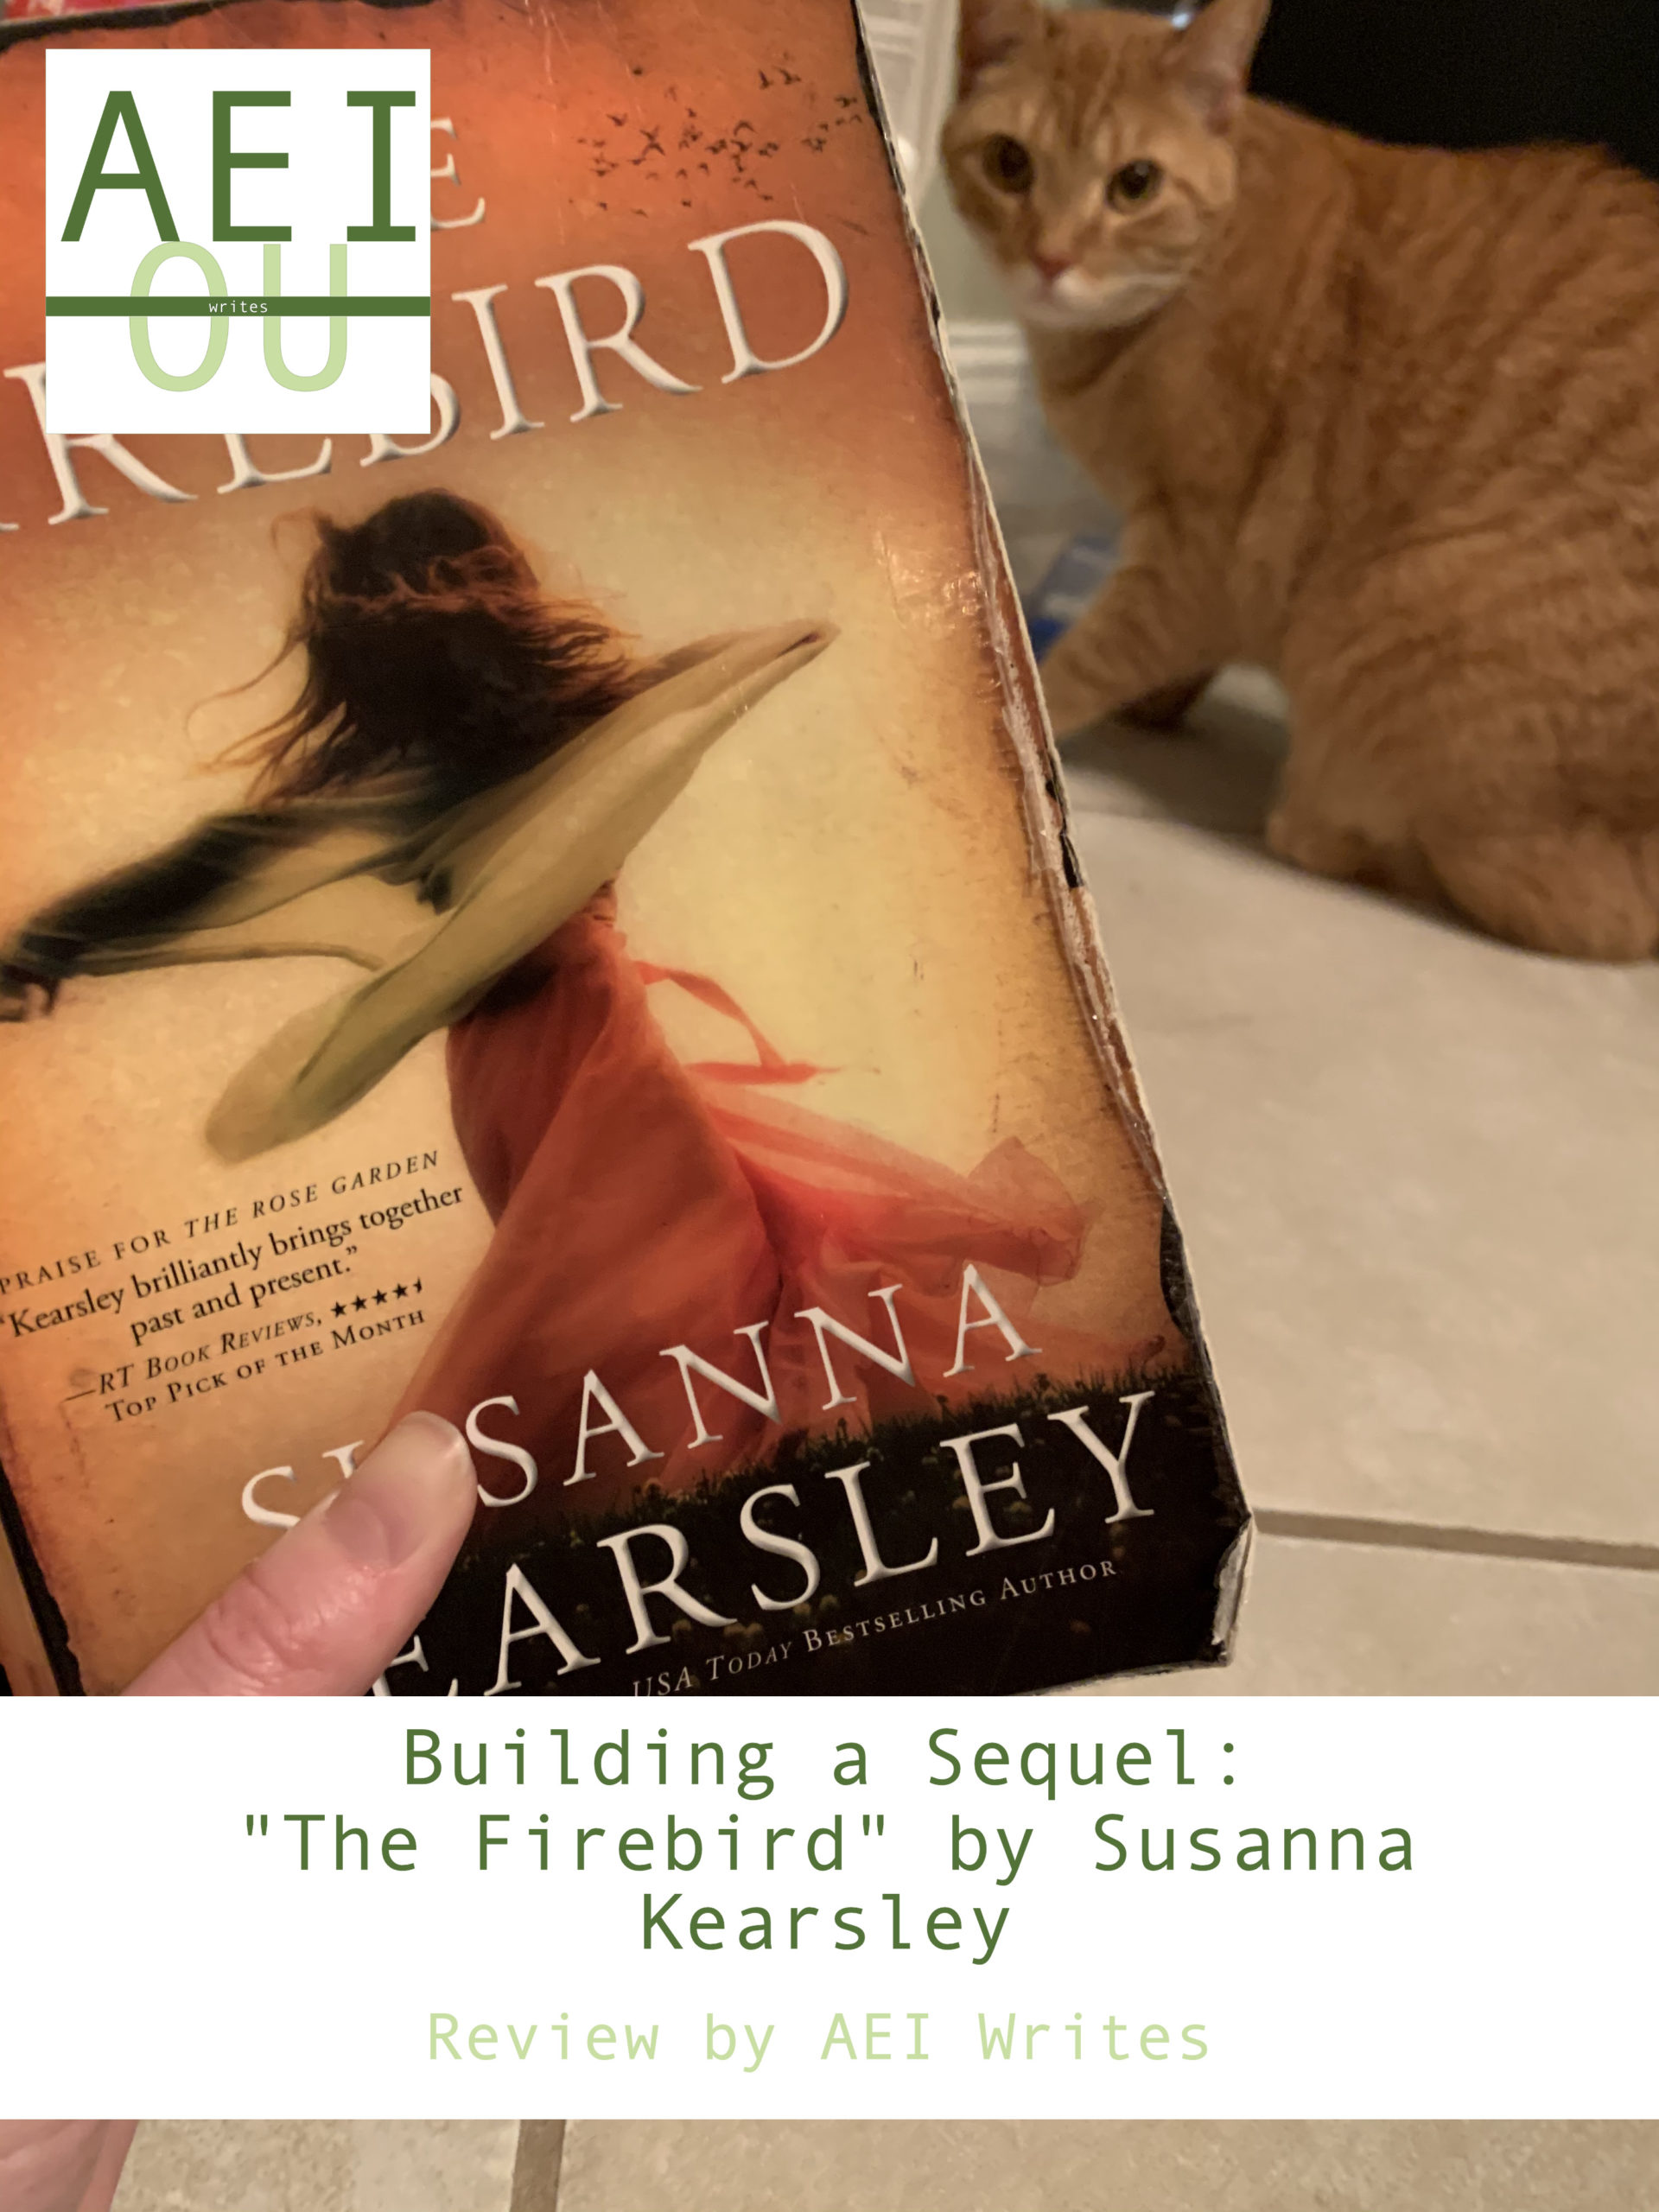 Building a Sequel: “The Firebird” by Susanna Kearsley